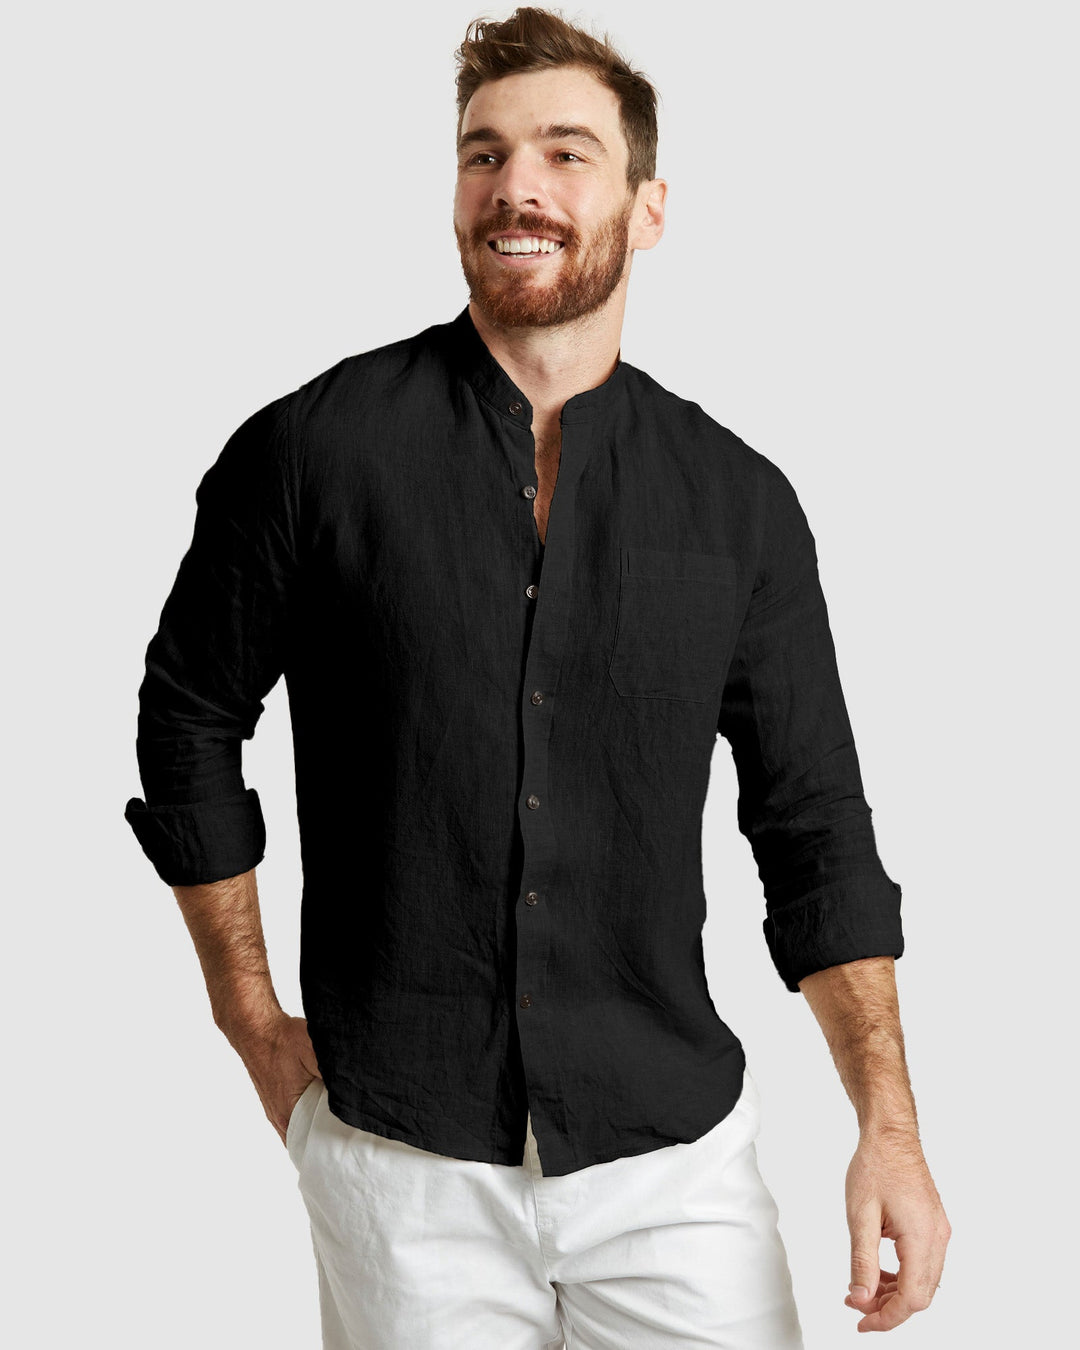 100% cotton mandarin collar shirt - Man